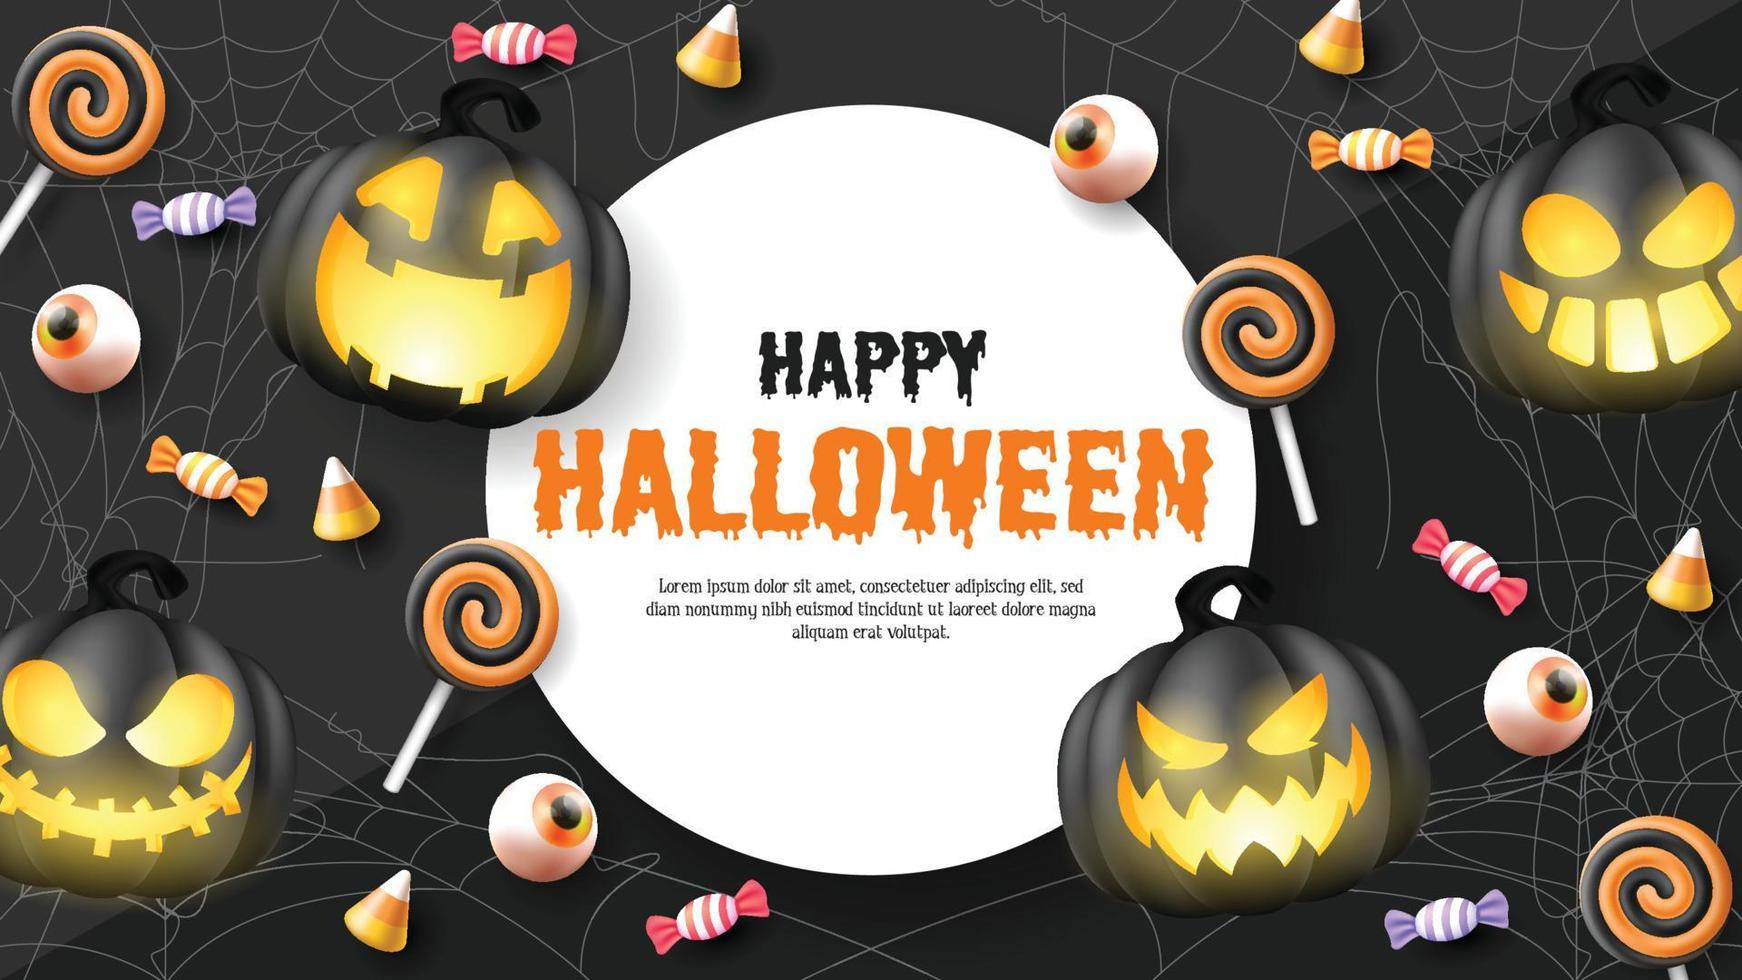 Joyeux Halloween. illustration vectorielle d'halloween avec des citrouilles d'halloween et des éléments d'halloween. vecteur